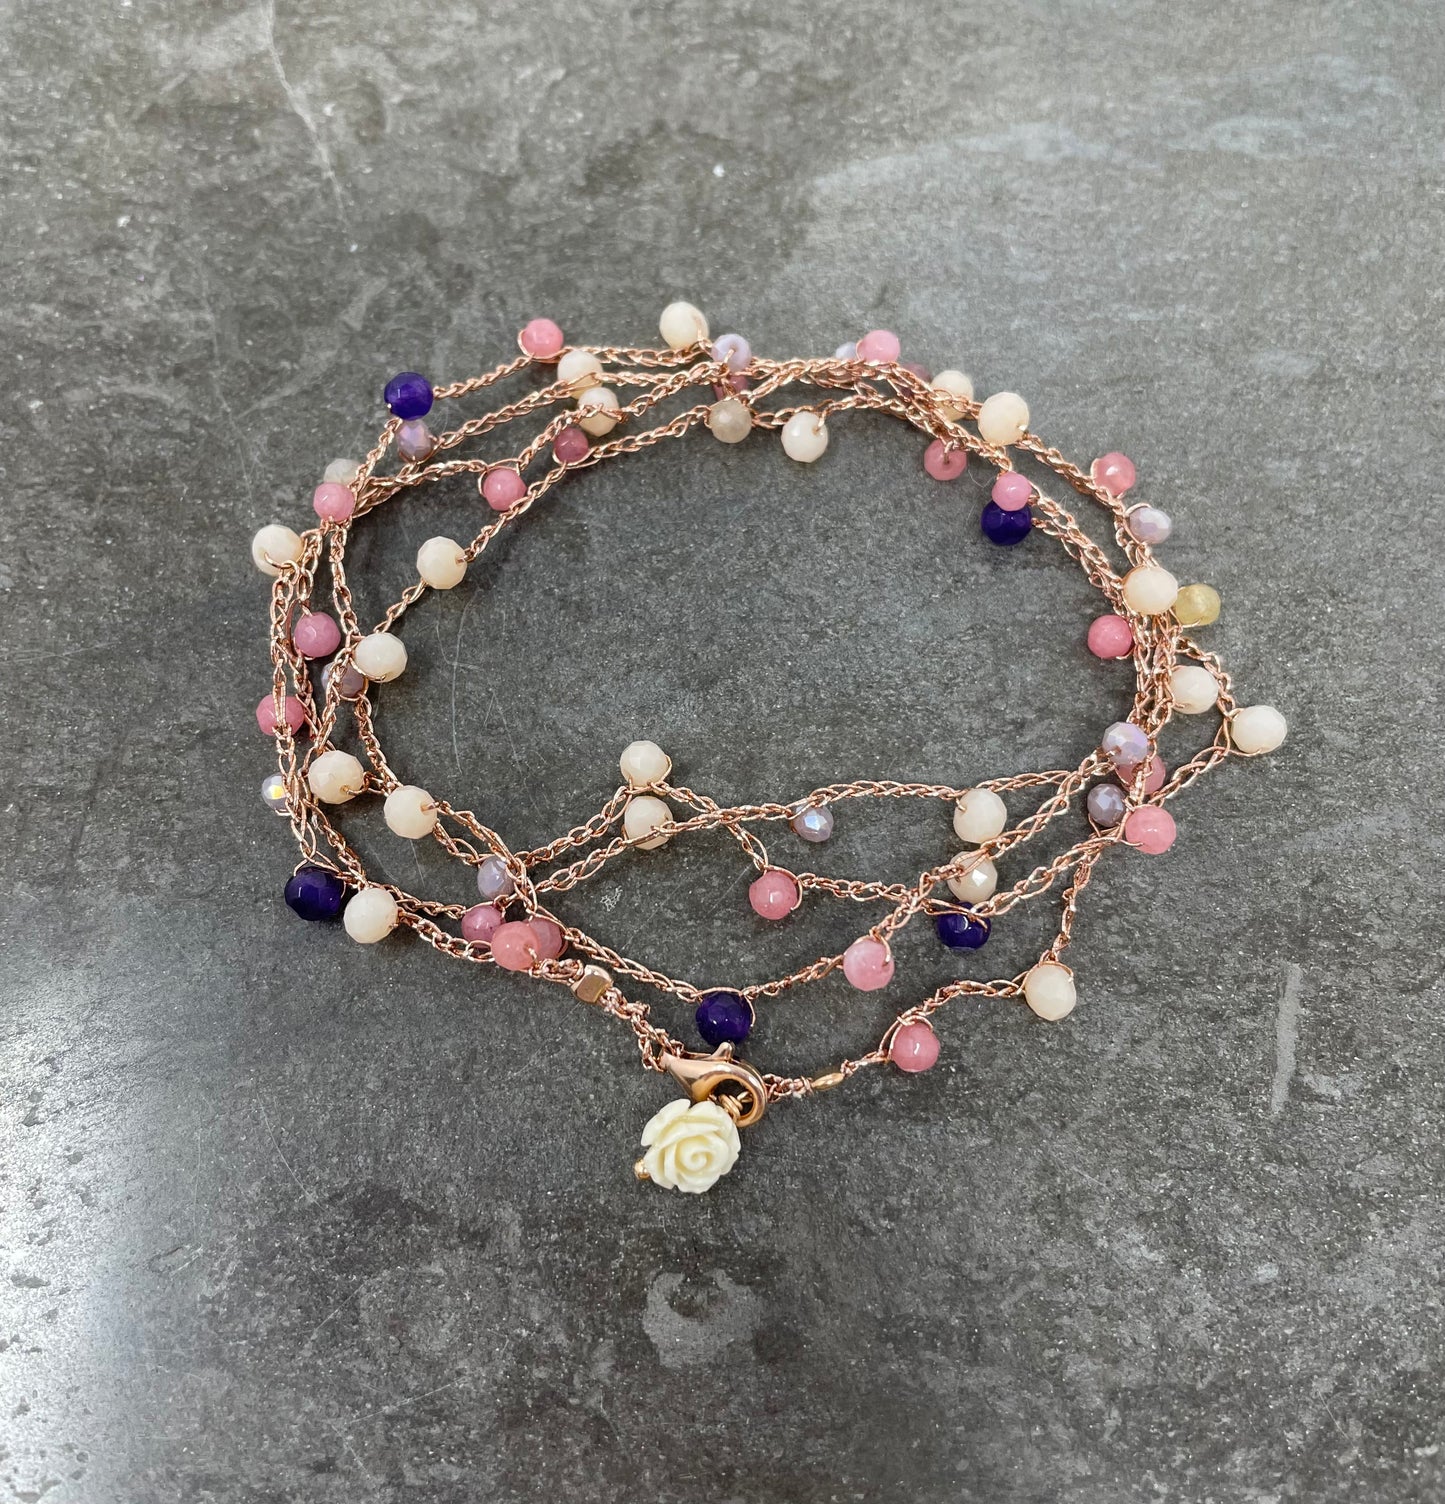 Cavigliera o collana o bracciale in macramè con cristalli rosa, viola, beige e rosellina